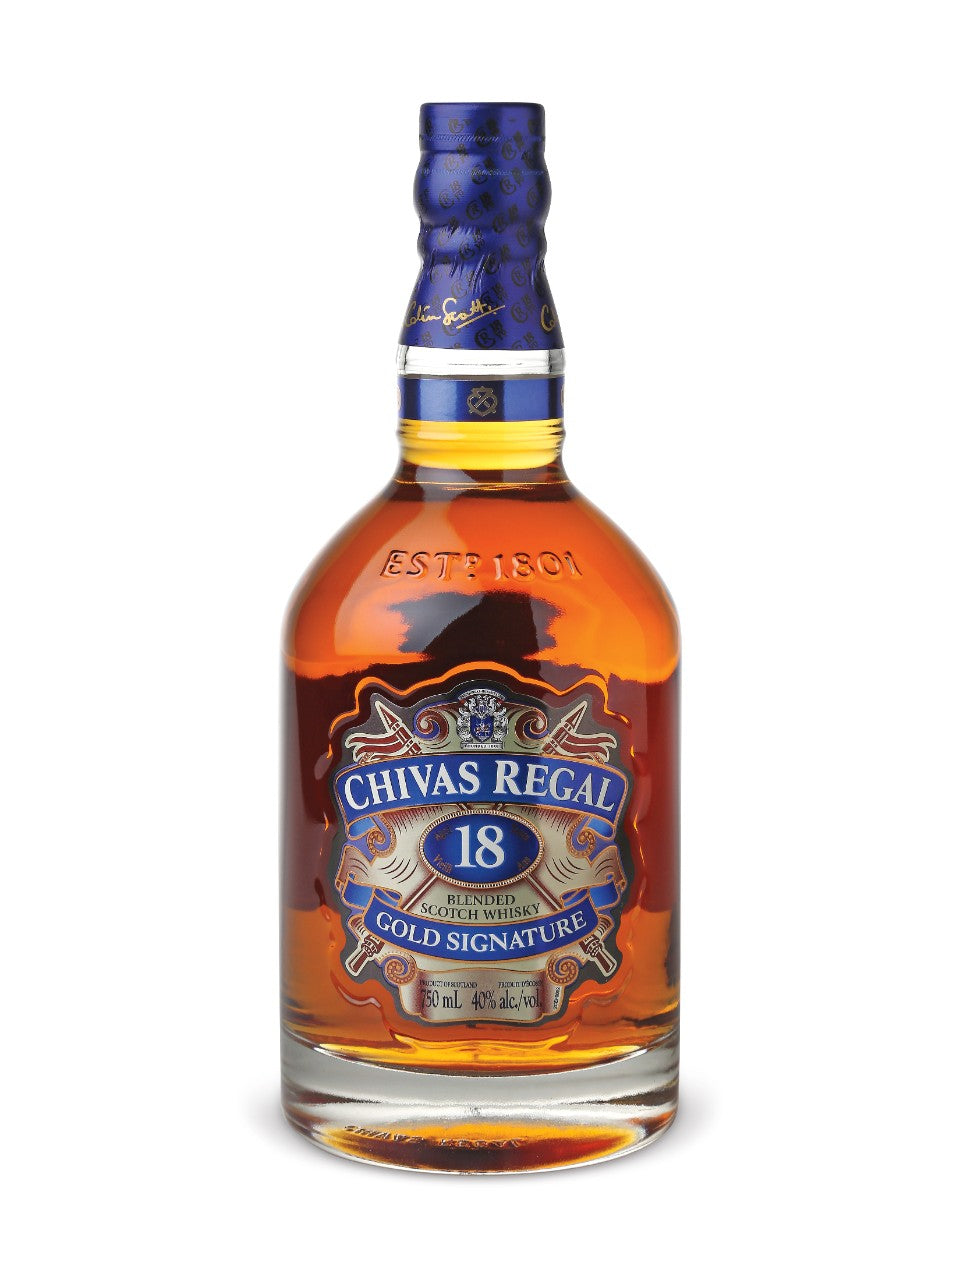 Chivas Regal 18 Year Old Scotch Whisky 750 ml bottle